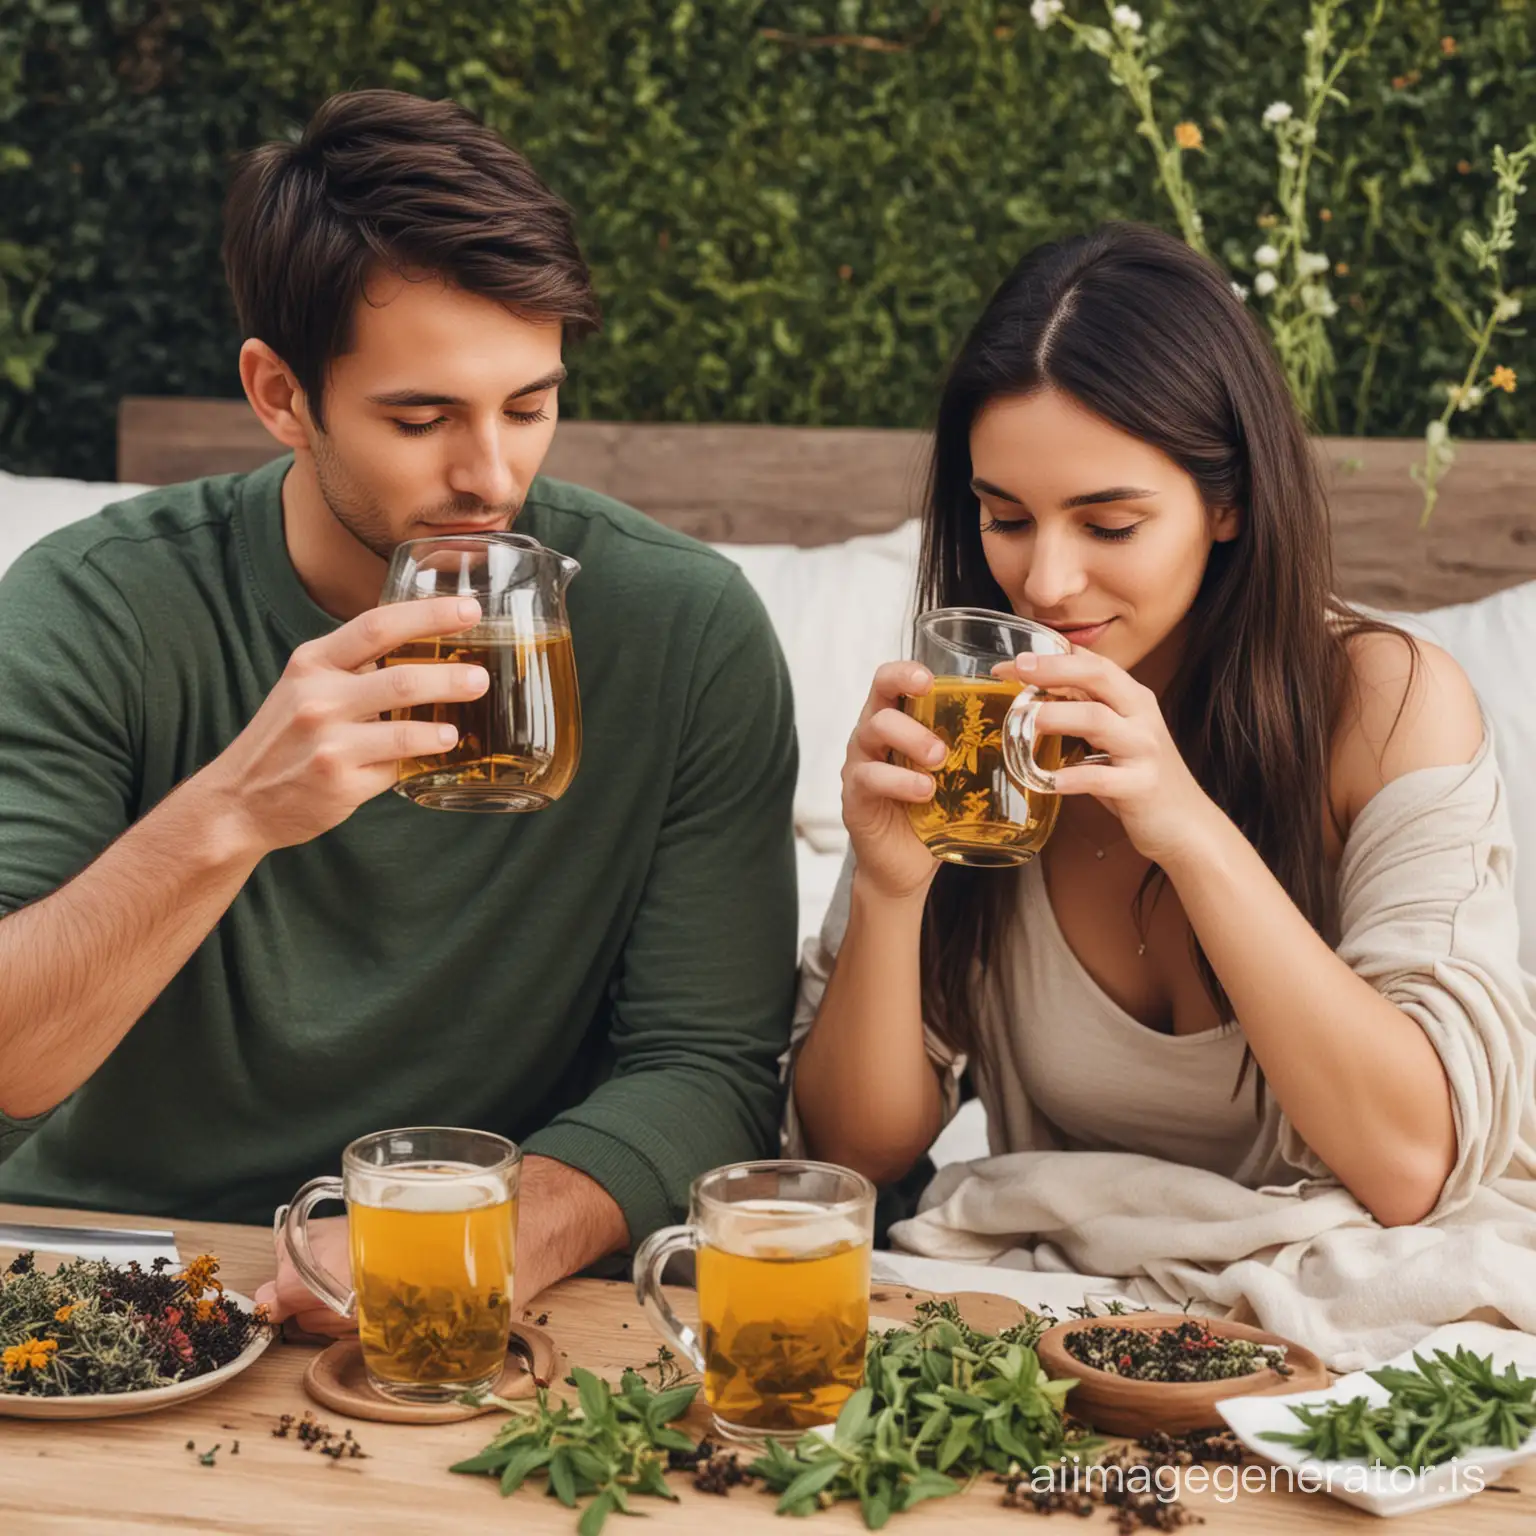 Couple-Enjoying-Health-Benefits-of-Herbal-Teas-in-a-Serene-Garden